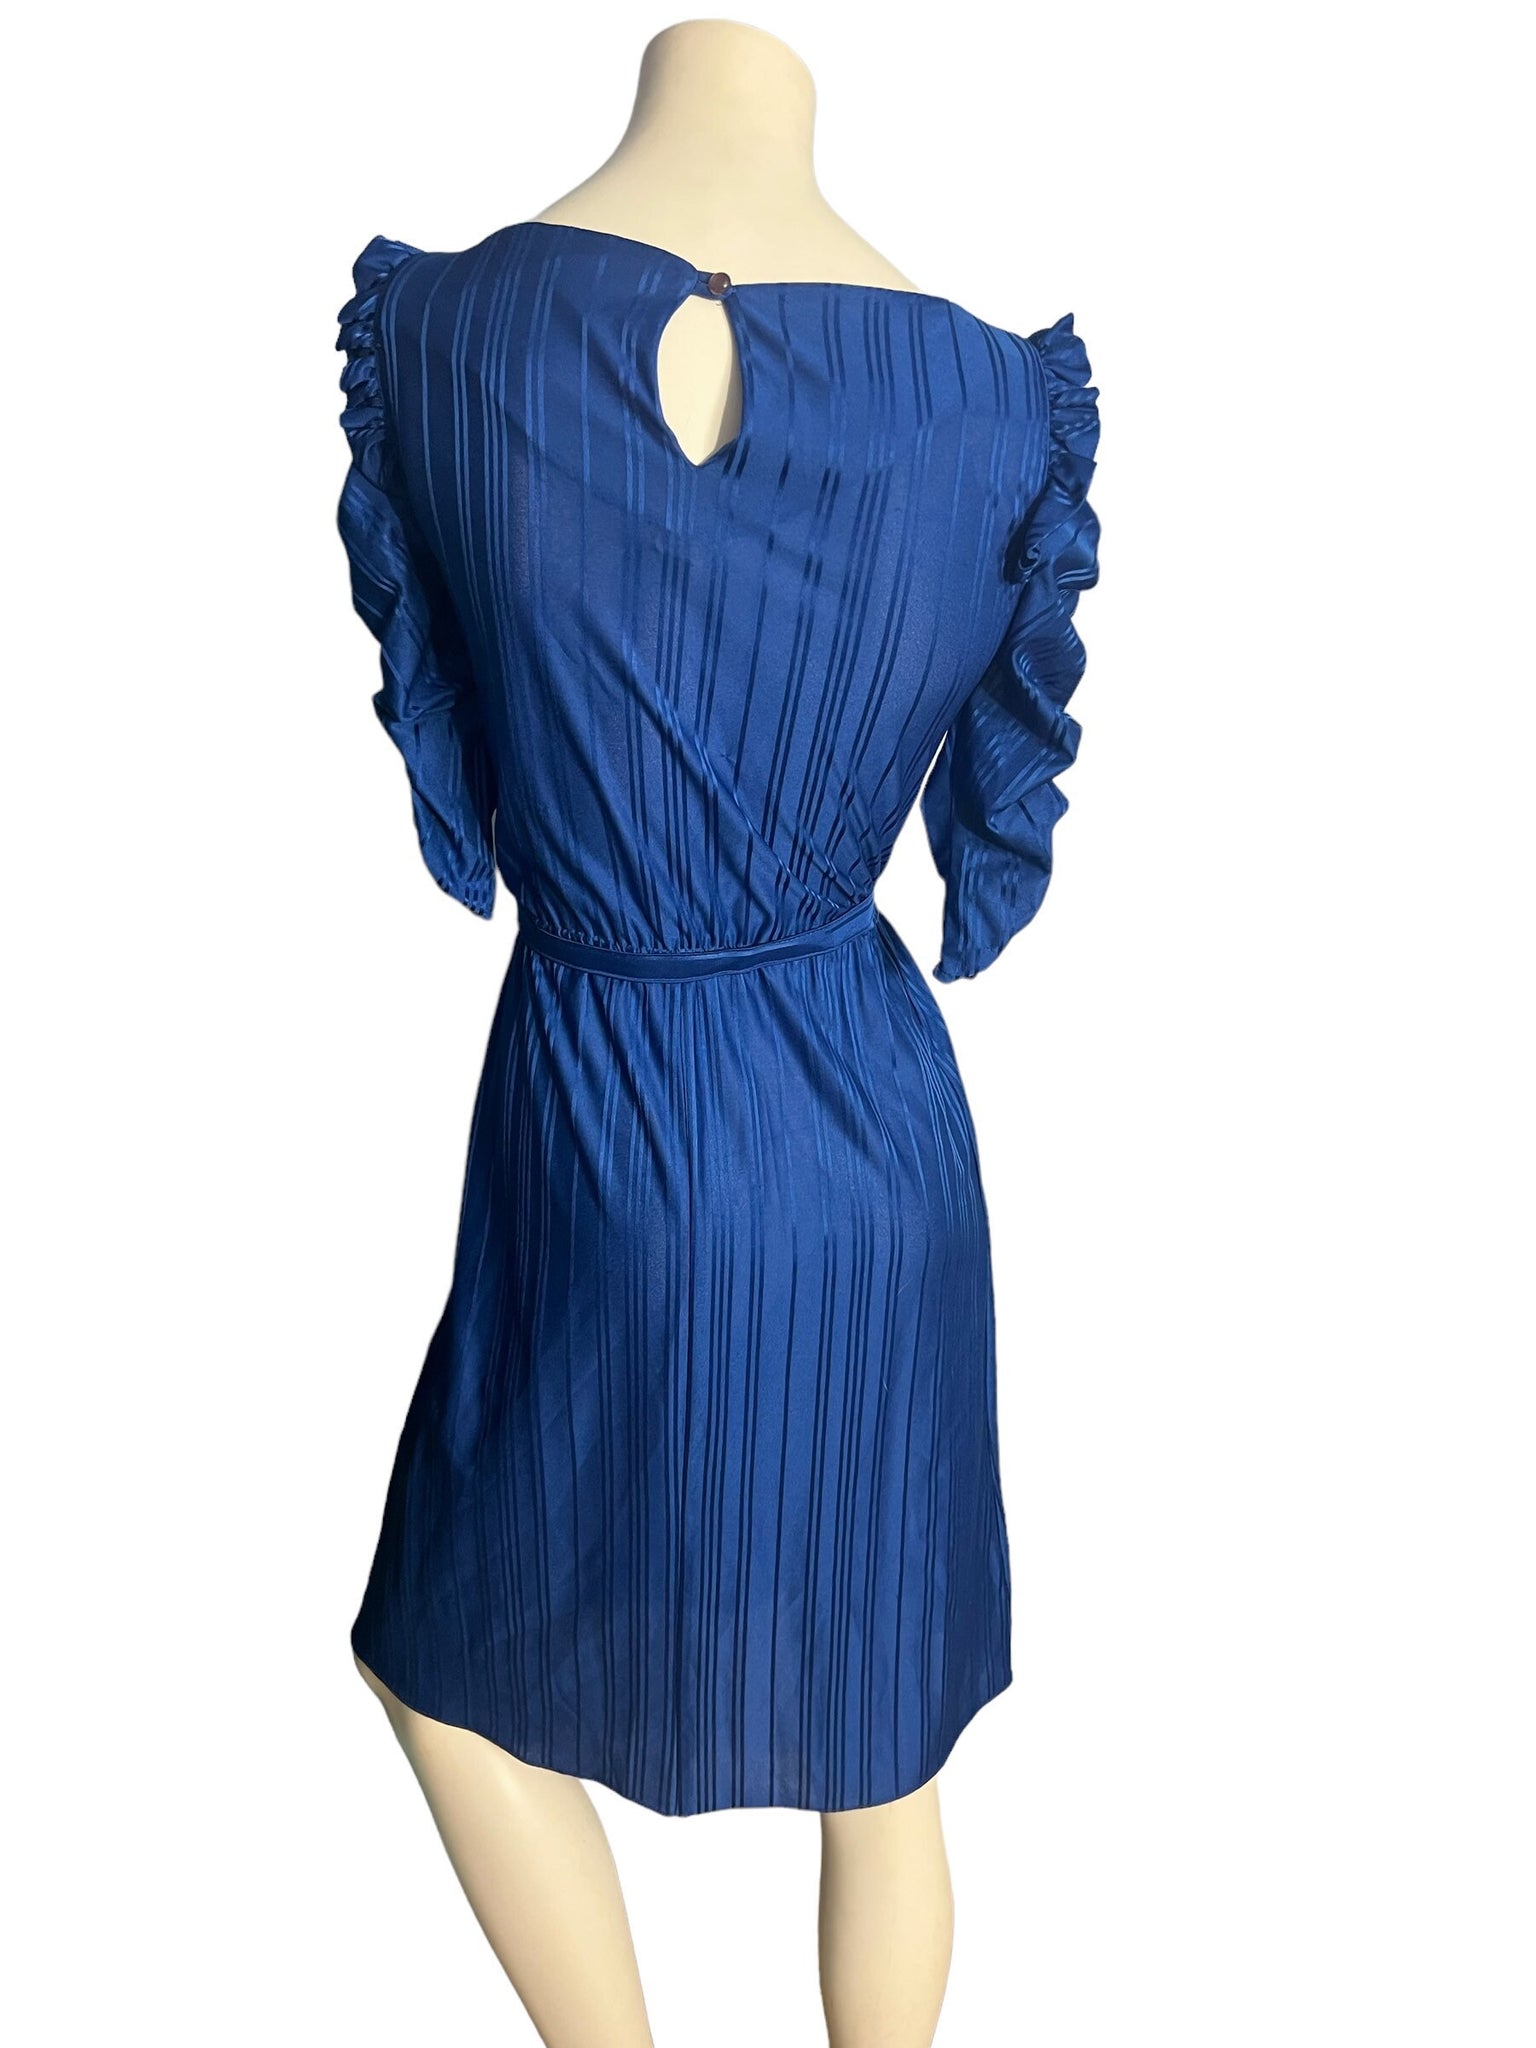 Vintage blue 80's dress semi sheer S M